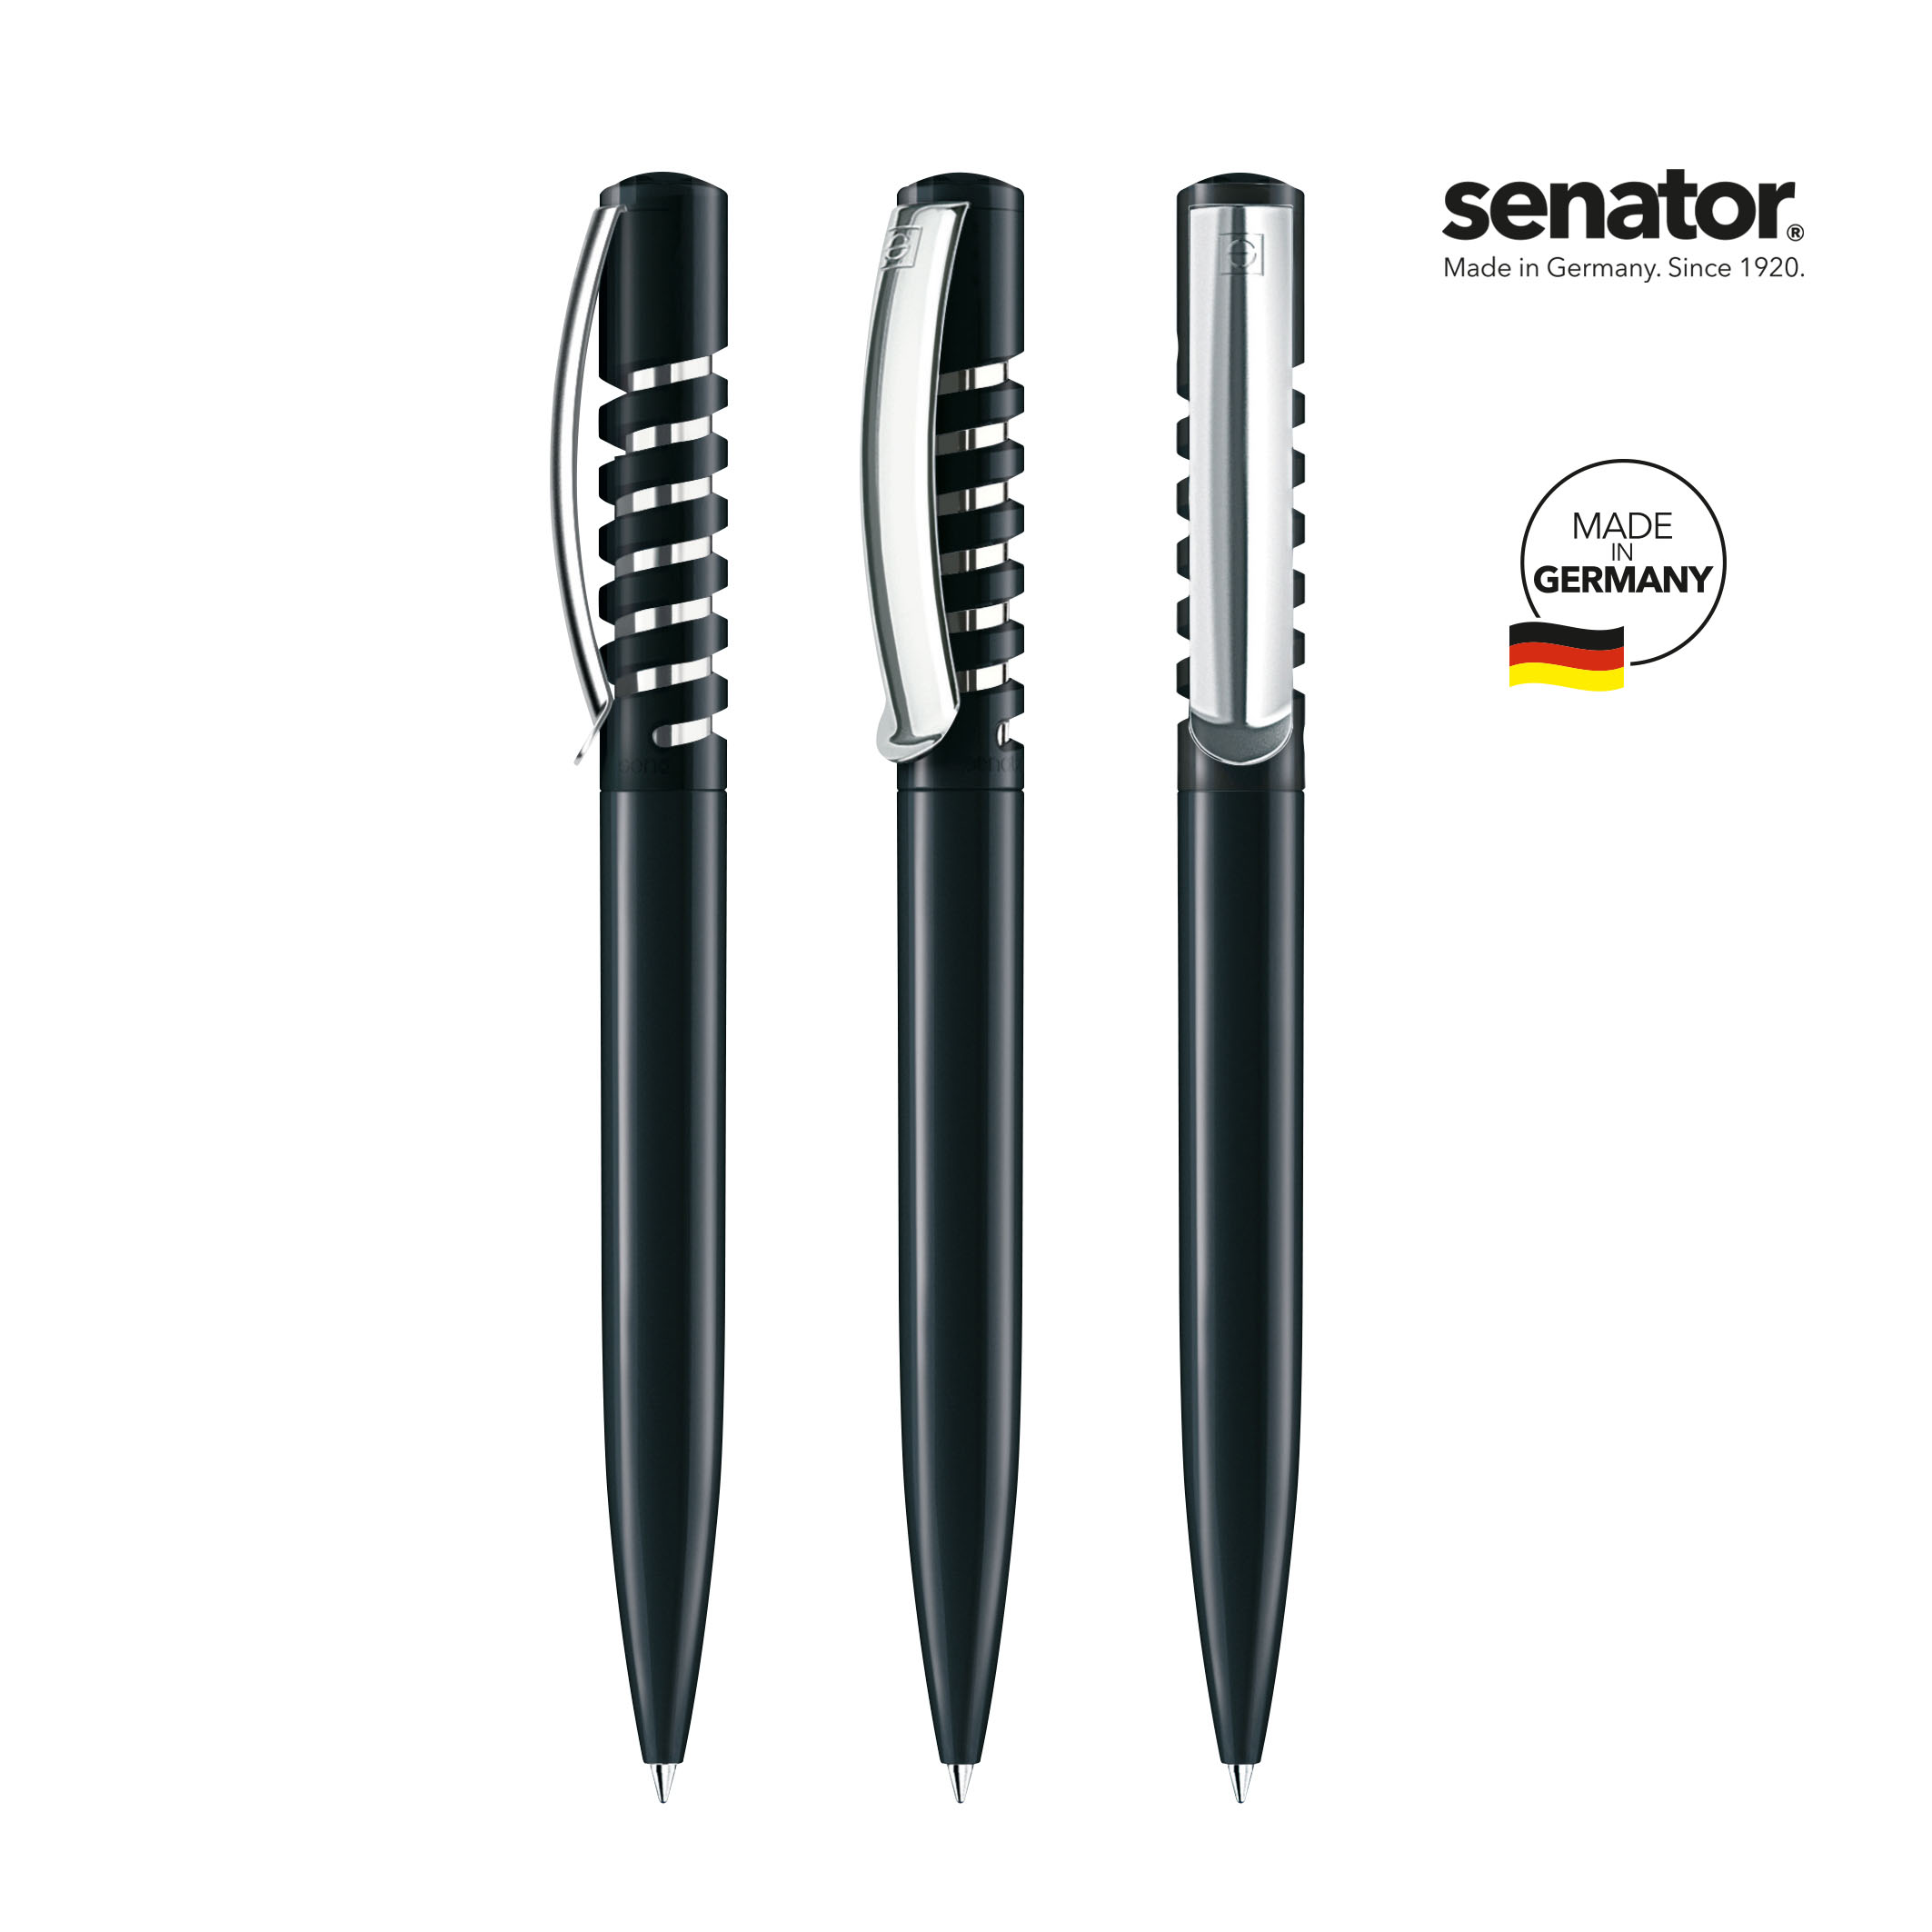 2310-senator-new-spring-polished-mc-black-5-p